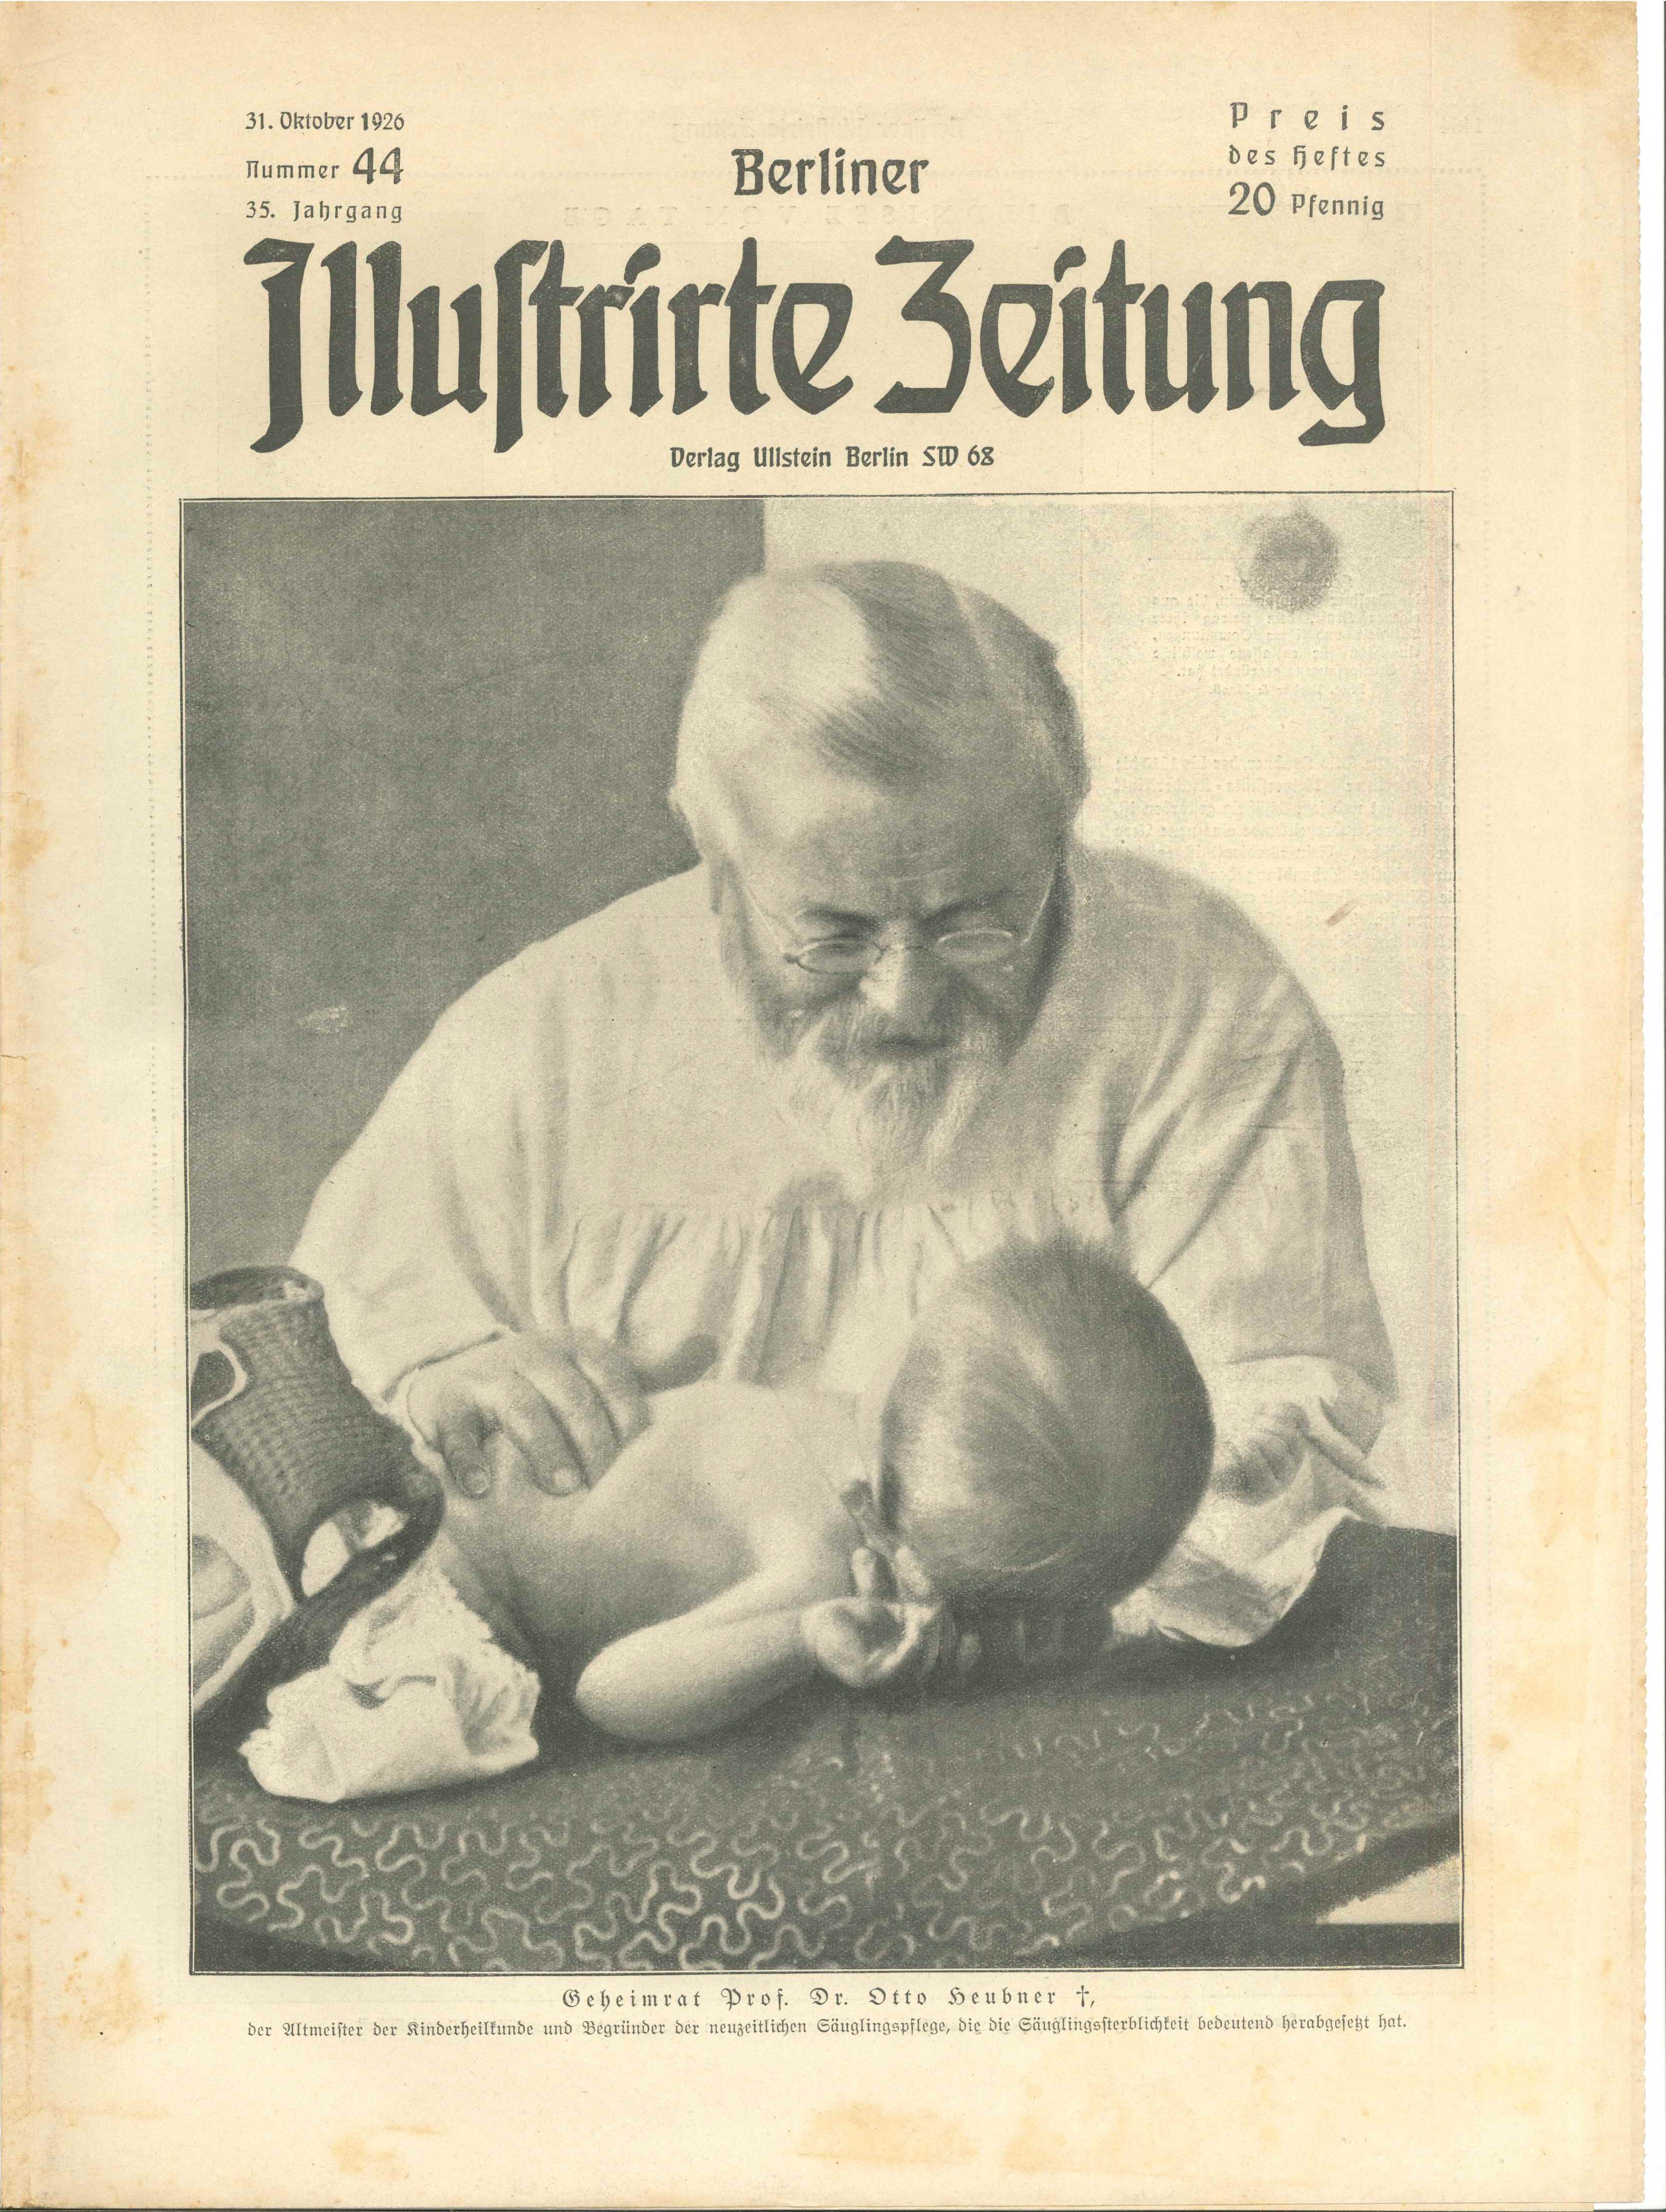 BIZ, Nr. 44, 1926, Titelseite (Kurt Tucholsky Literaturmuseum CC BY-NC-SA)